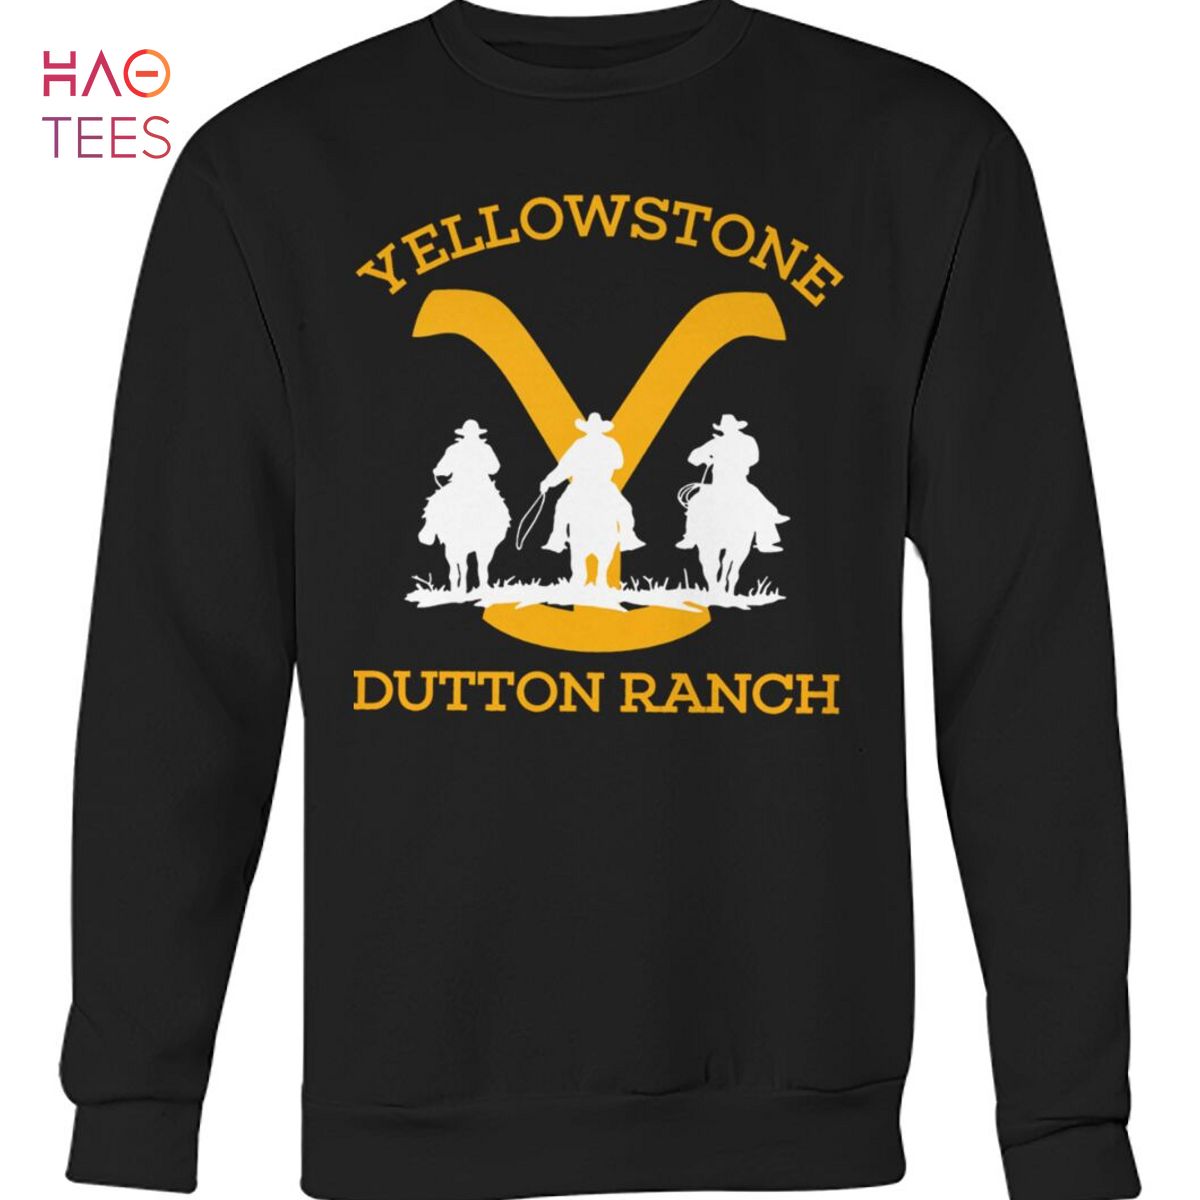 Yellowstone Dutton Ranch Shirt Limited Edition